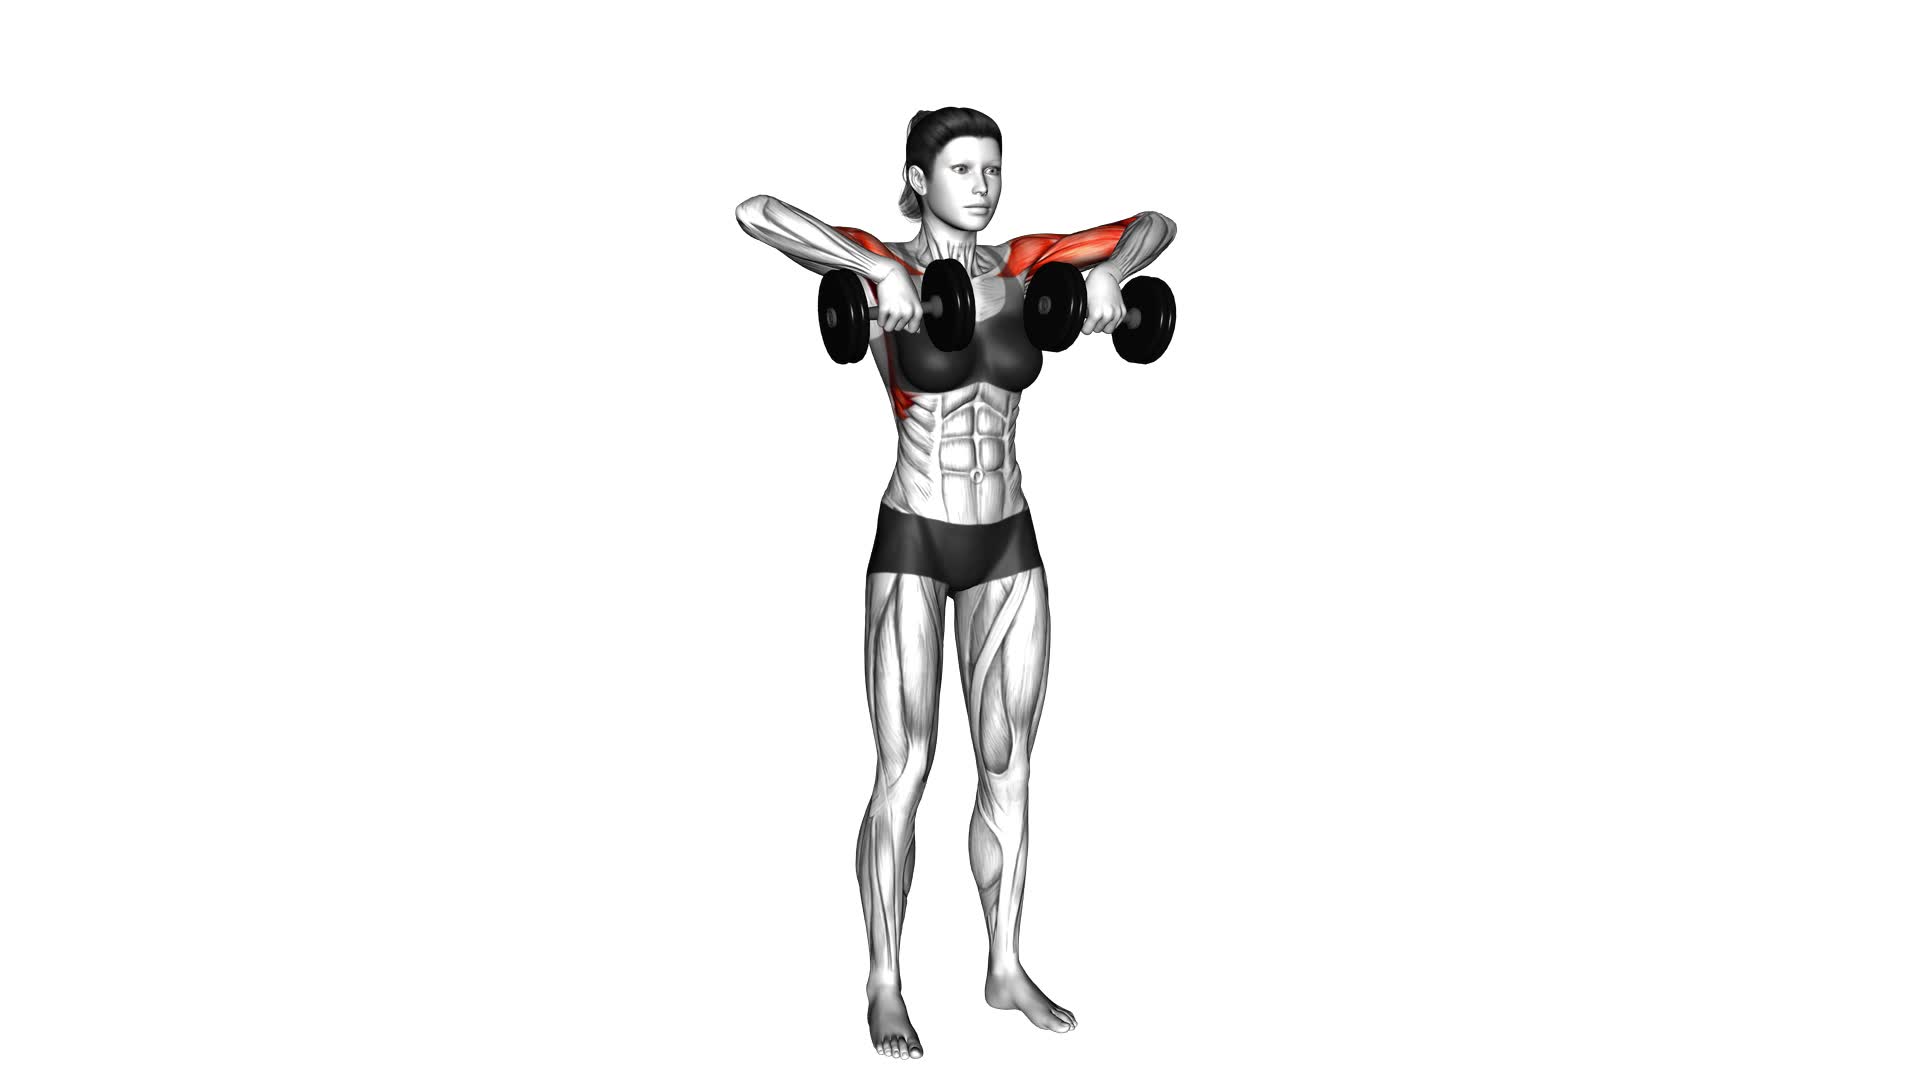 Dumbbell Upright Row (female) - Video Exercise Guide & Tips